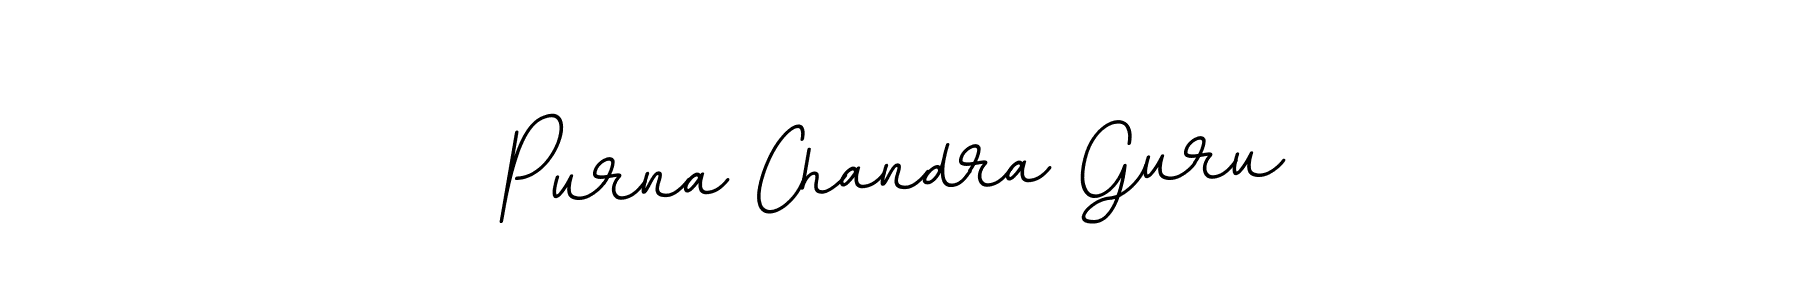 How to Draw Purna Chandra Guru signature style? BallpointsItalic-DORy9 is a latest design signature styles for name Purna Chandra Guru. Purna Chandra Guru signature style 11 images and pictures png